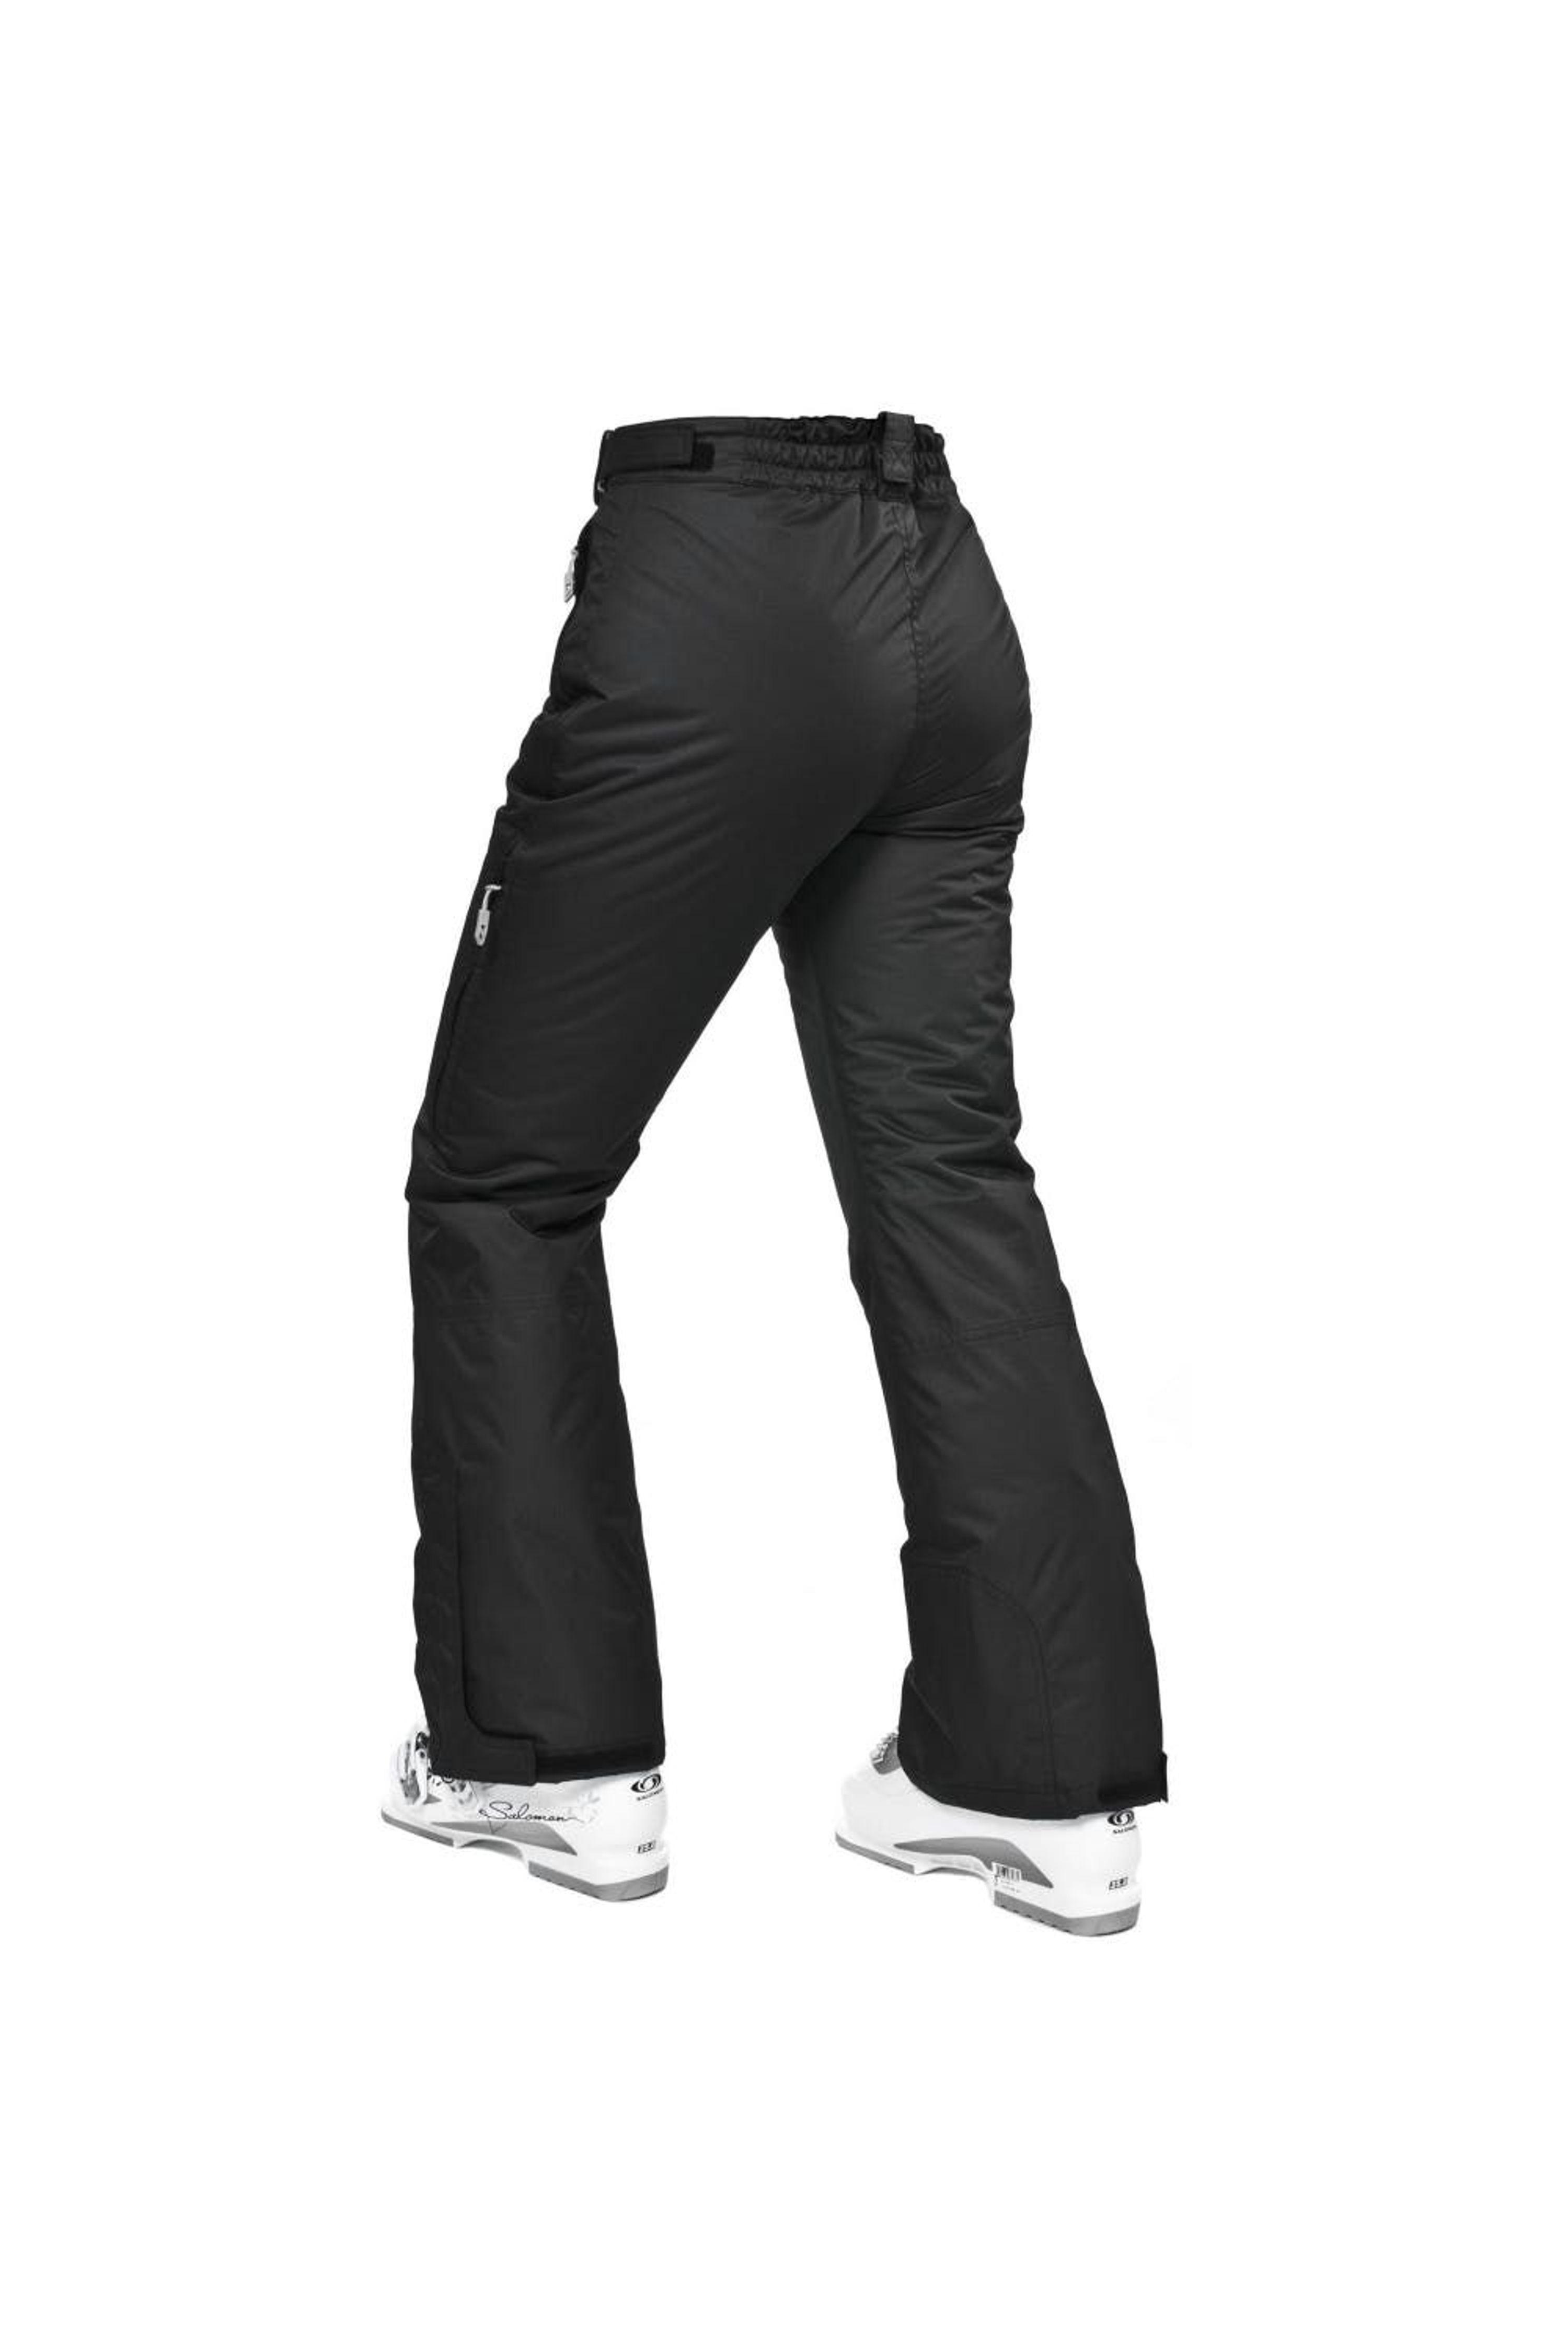 Womens Ski Pants & Trousers  Womens Salopettes - Trespass